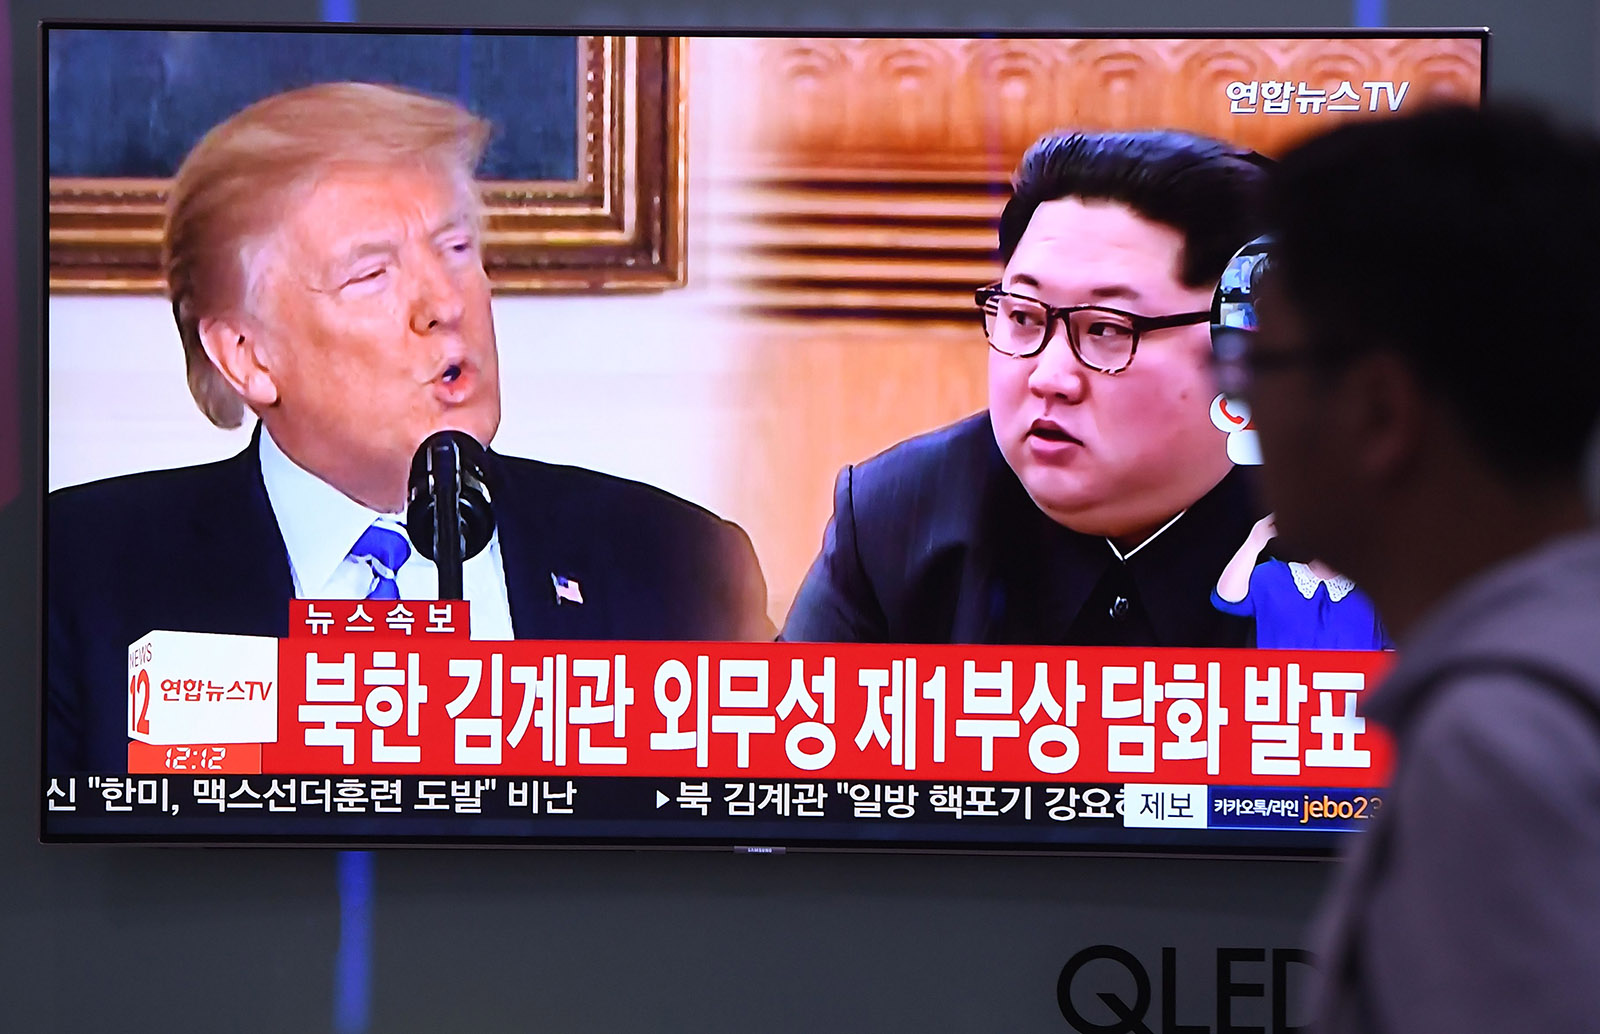 A railway station TV screen showing US President Donald Trump and North Korean leader Kim Jong-un, Seoul, South Korea, May 16, 2018